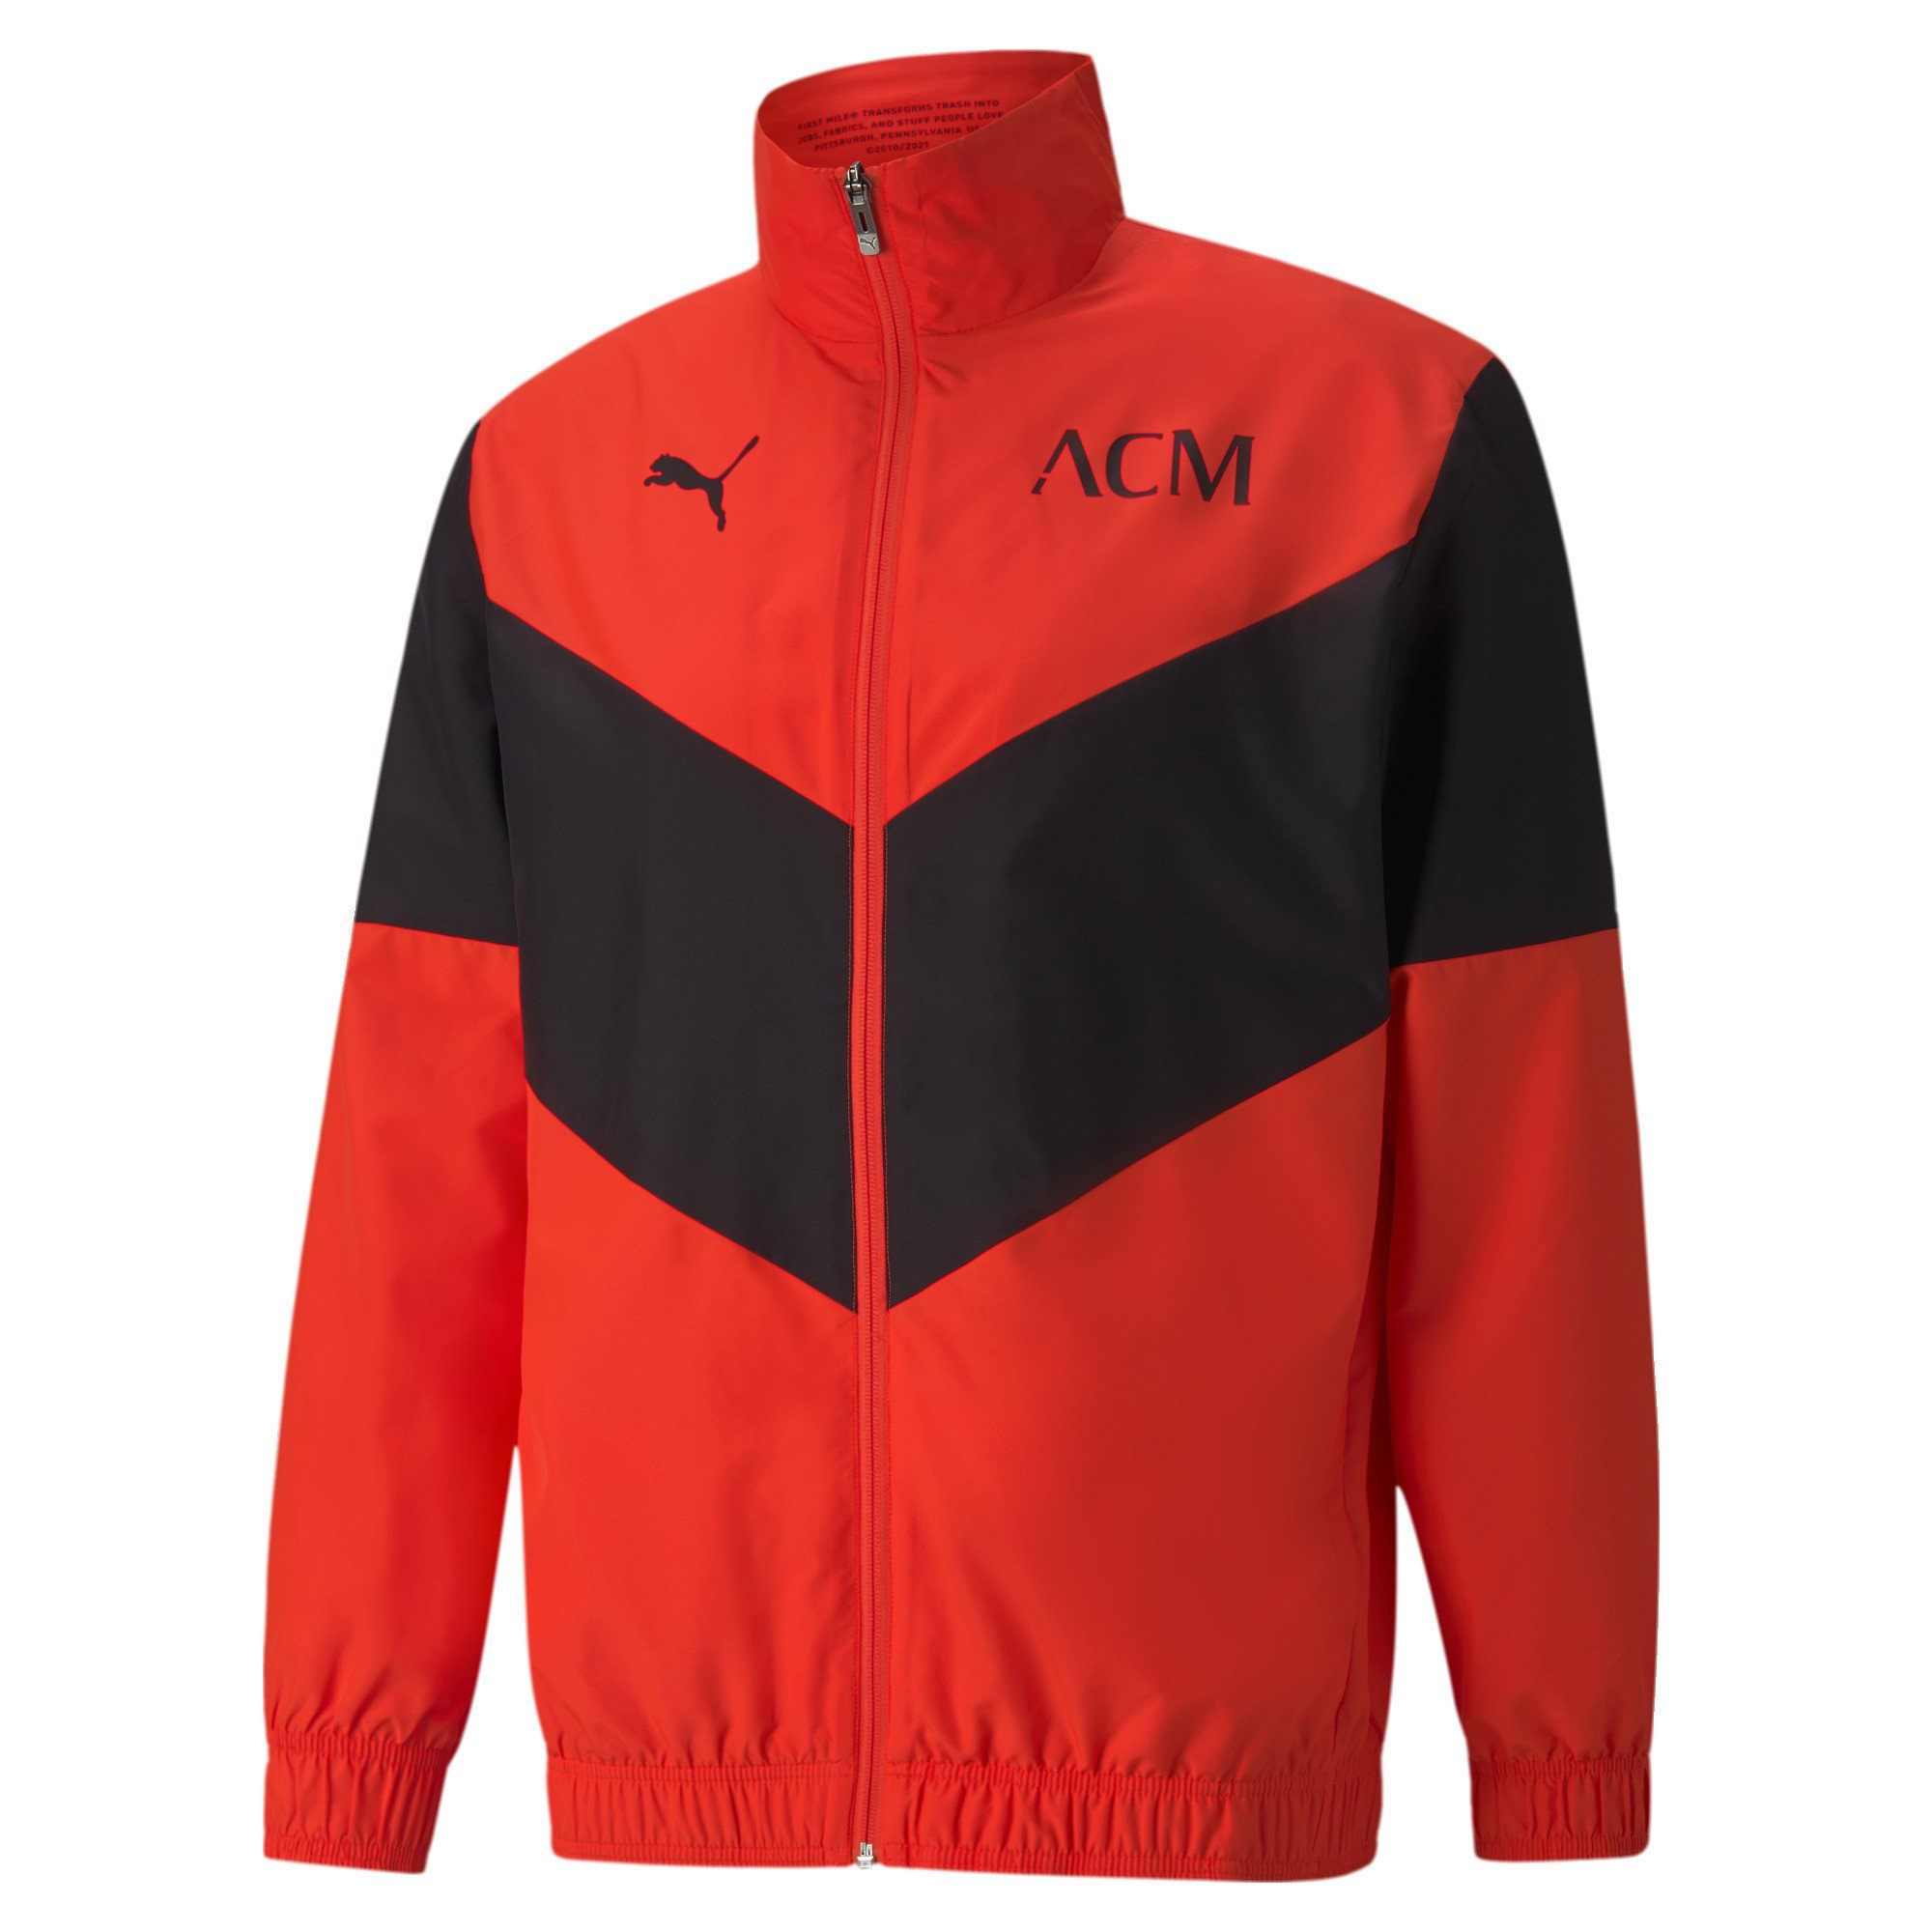 Puma ACM Prematch Football Jacket |